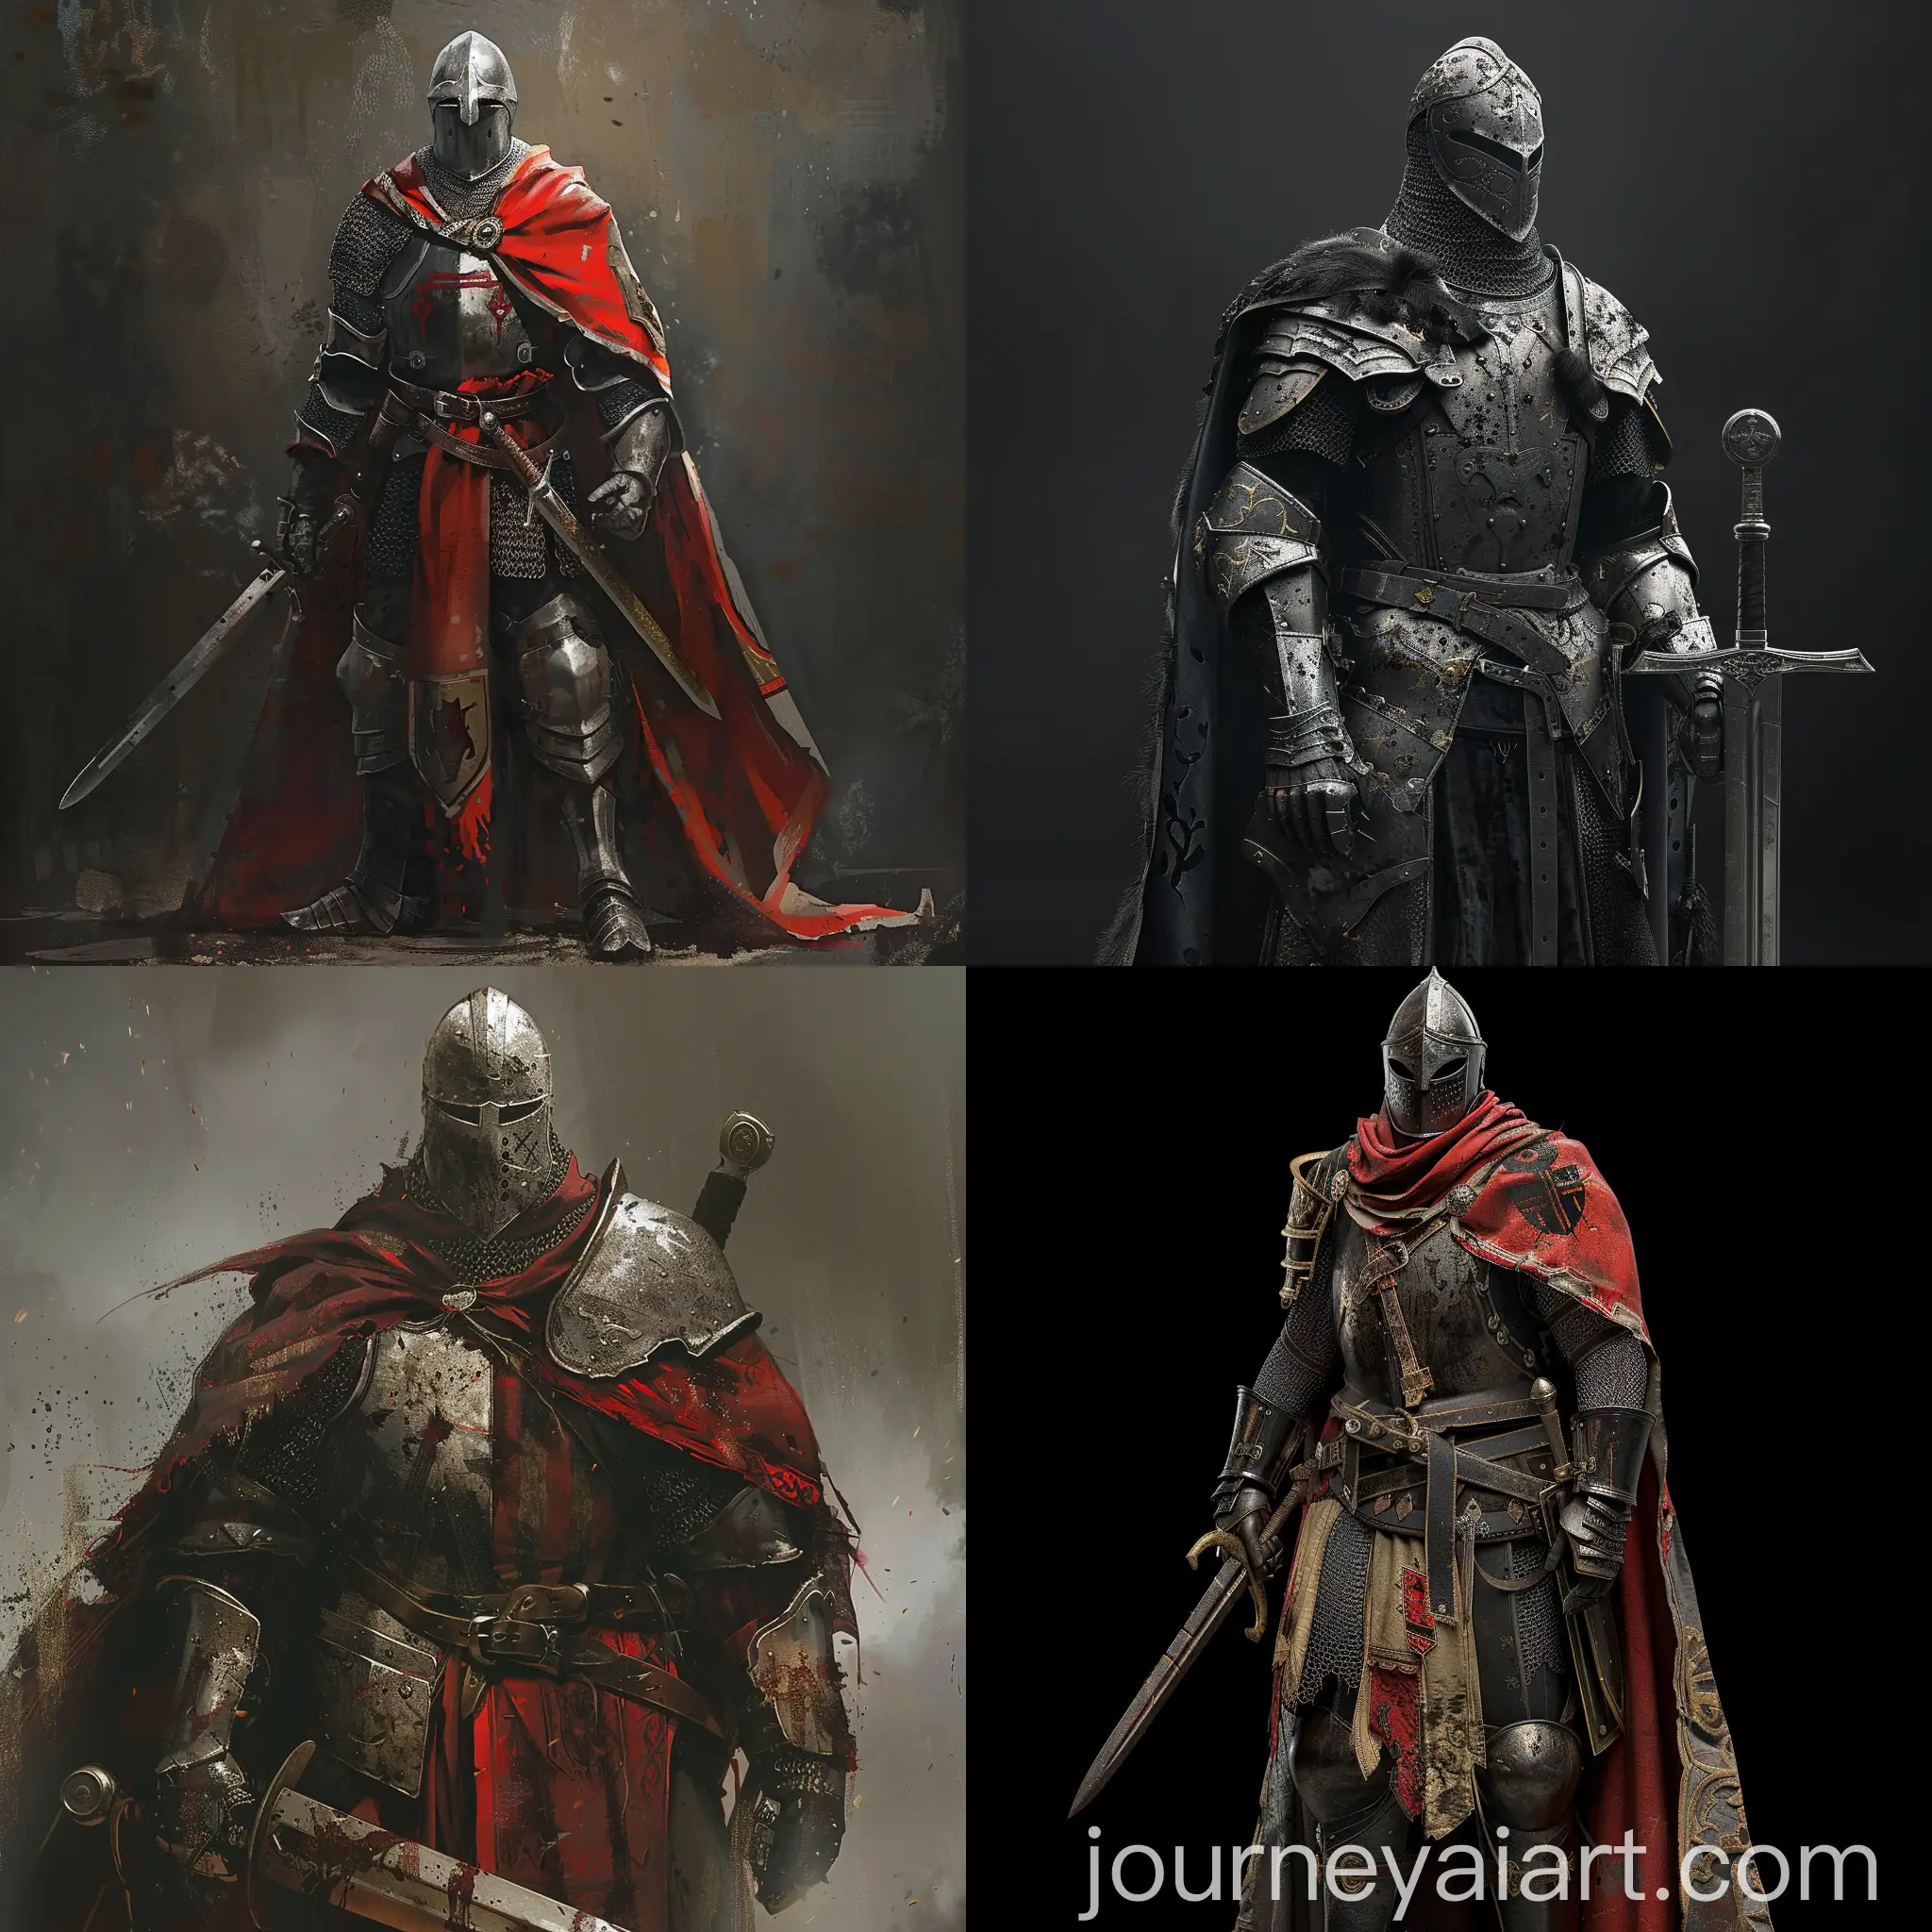 Medieval-Knight-in-Armor-Historical-Hero-Portrait